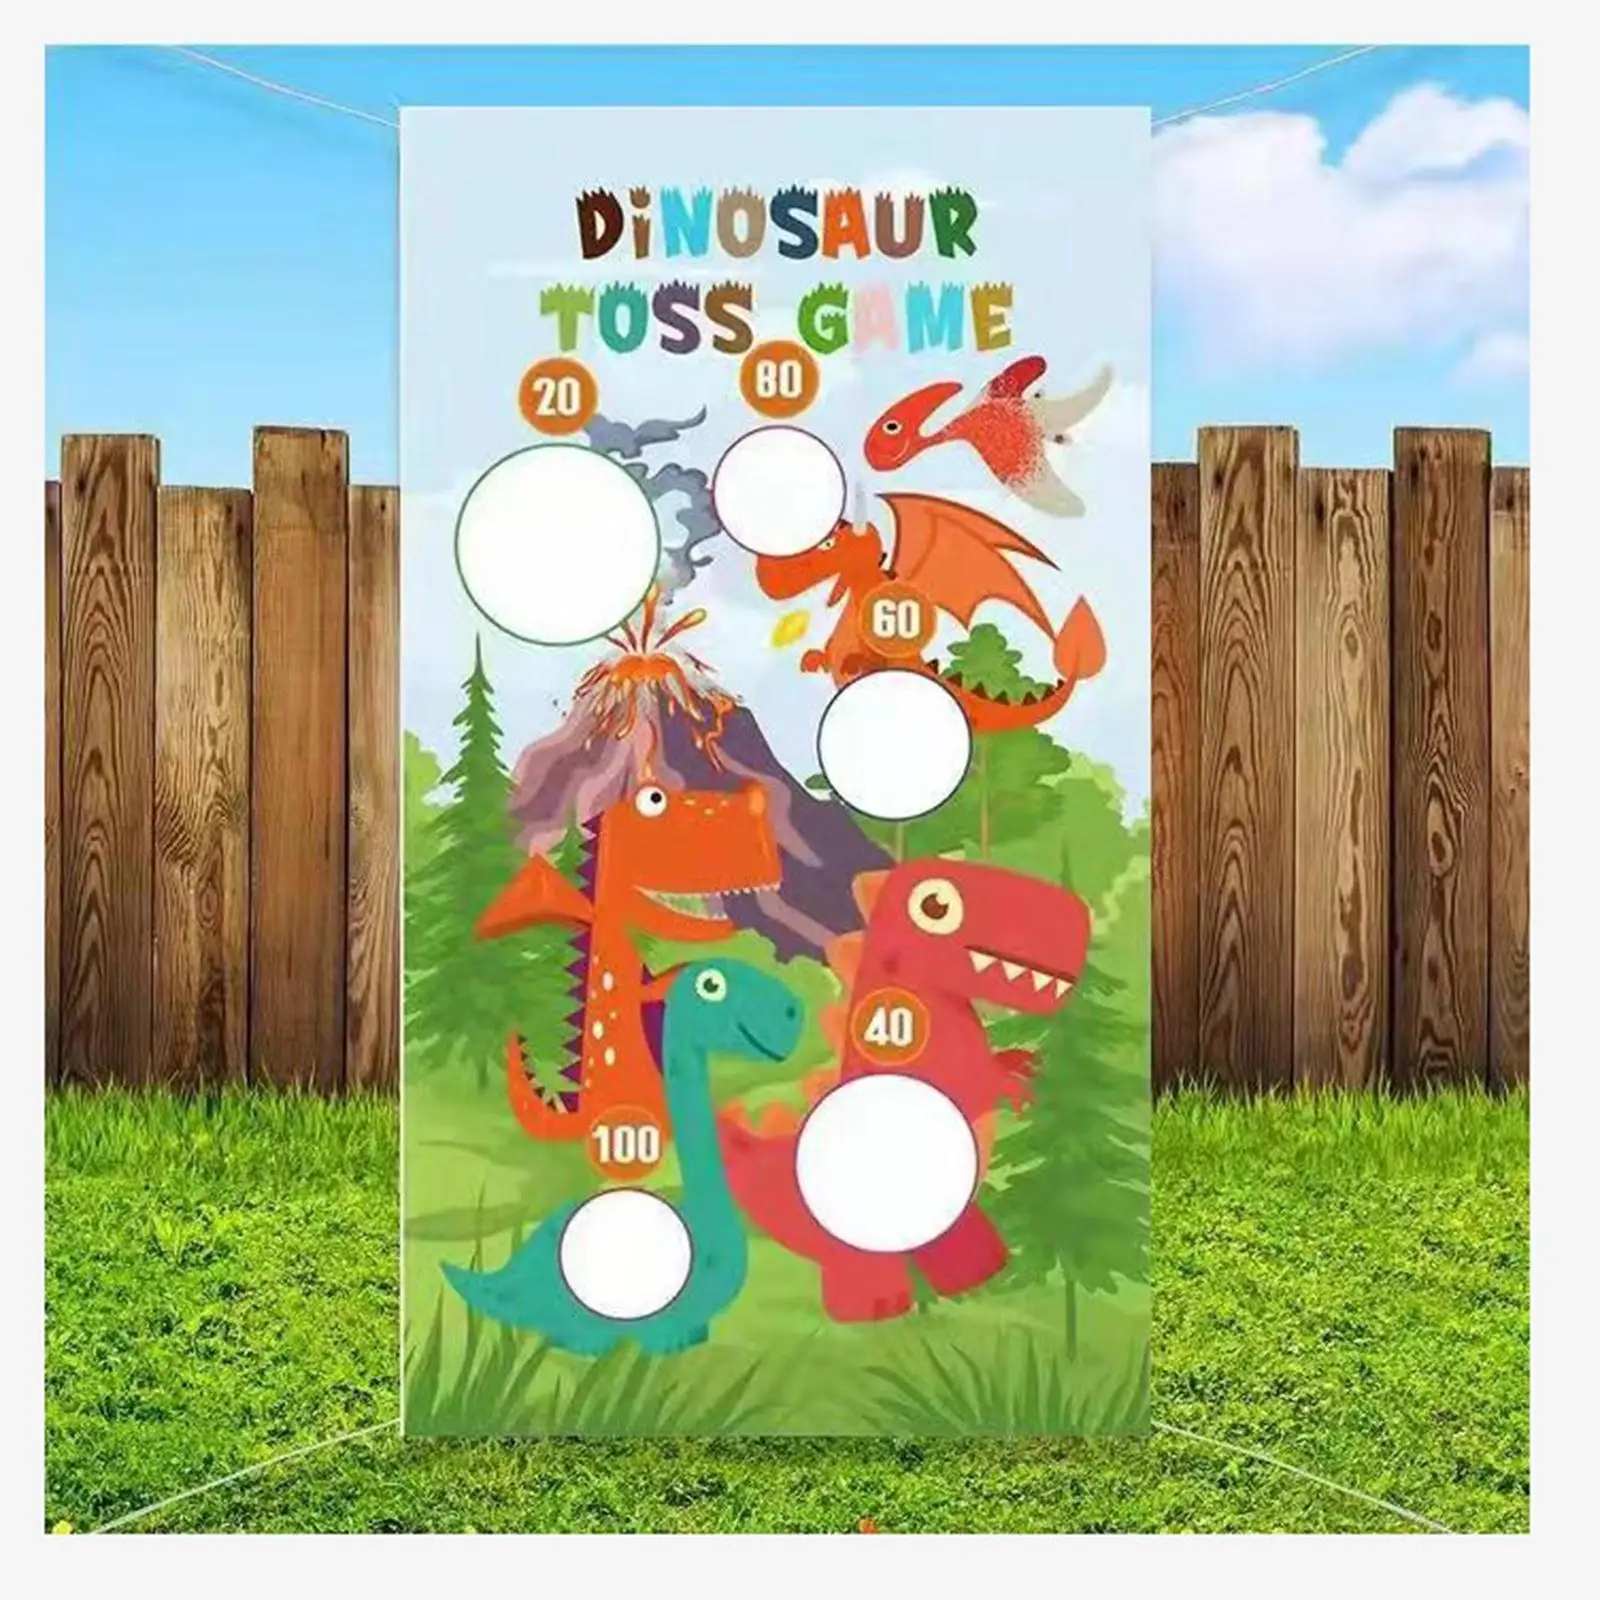 Dinosaur Children Bag Throwing Game Supplies Washable for Indoor Summer